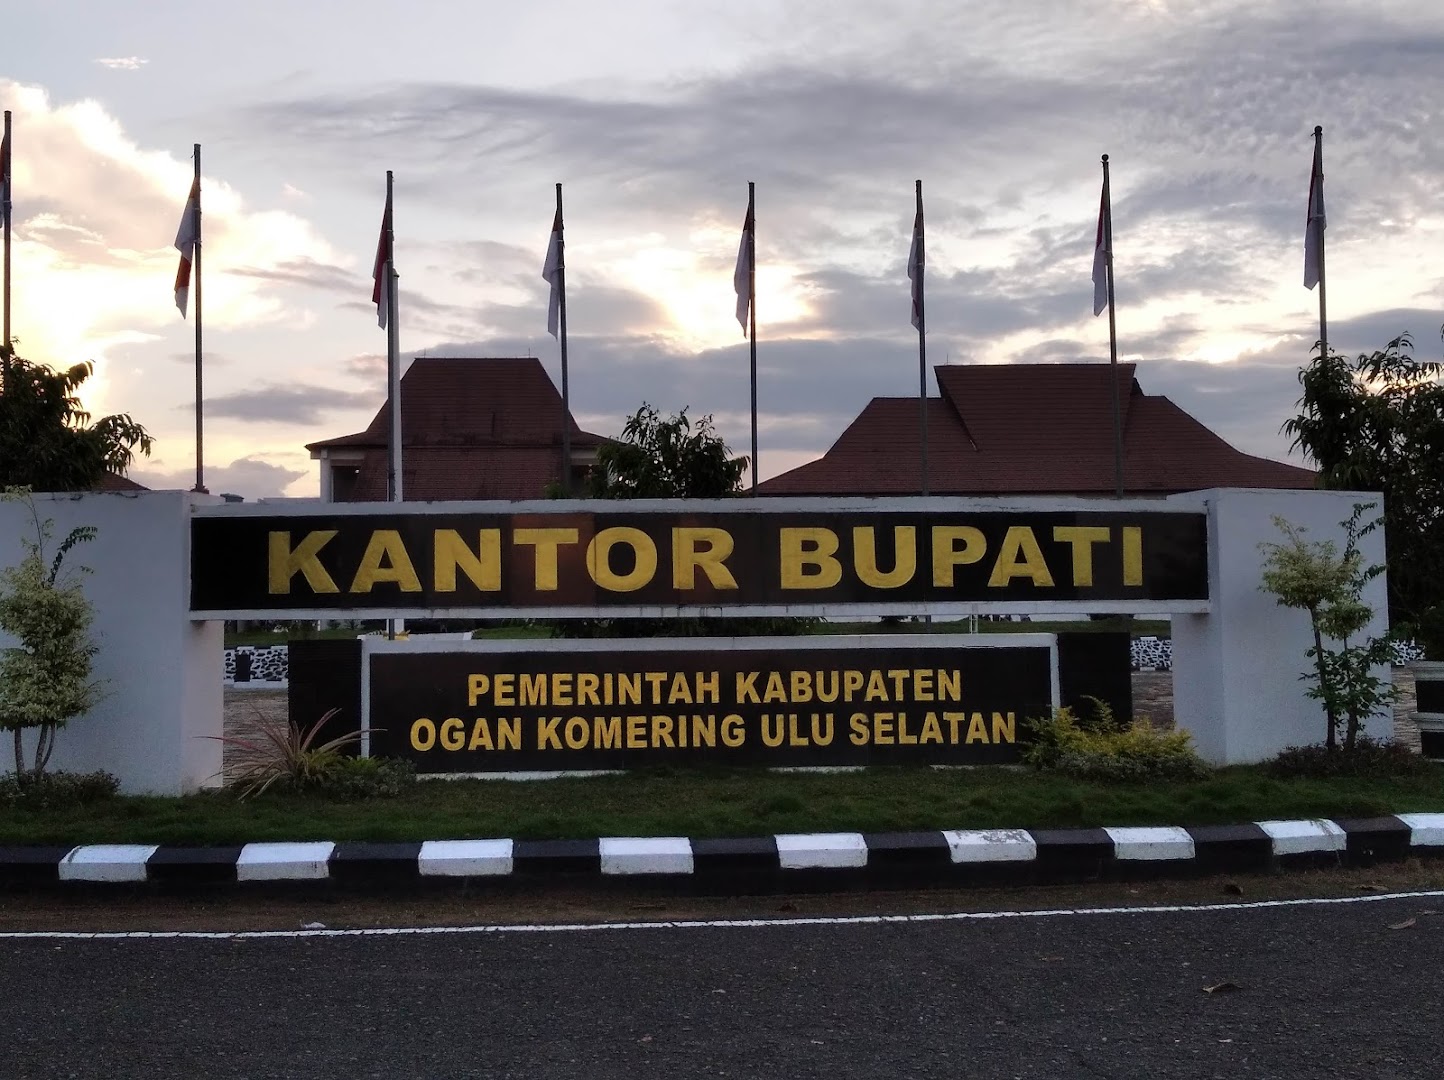 Kantor Bupati Kabupaten Ogan Komering Ulu Selatan (oku Selatan) Photo